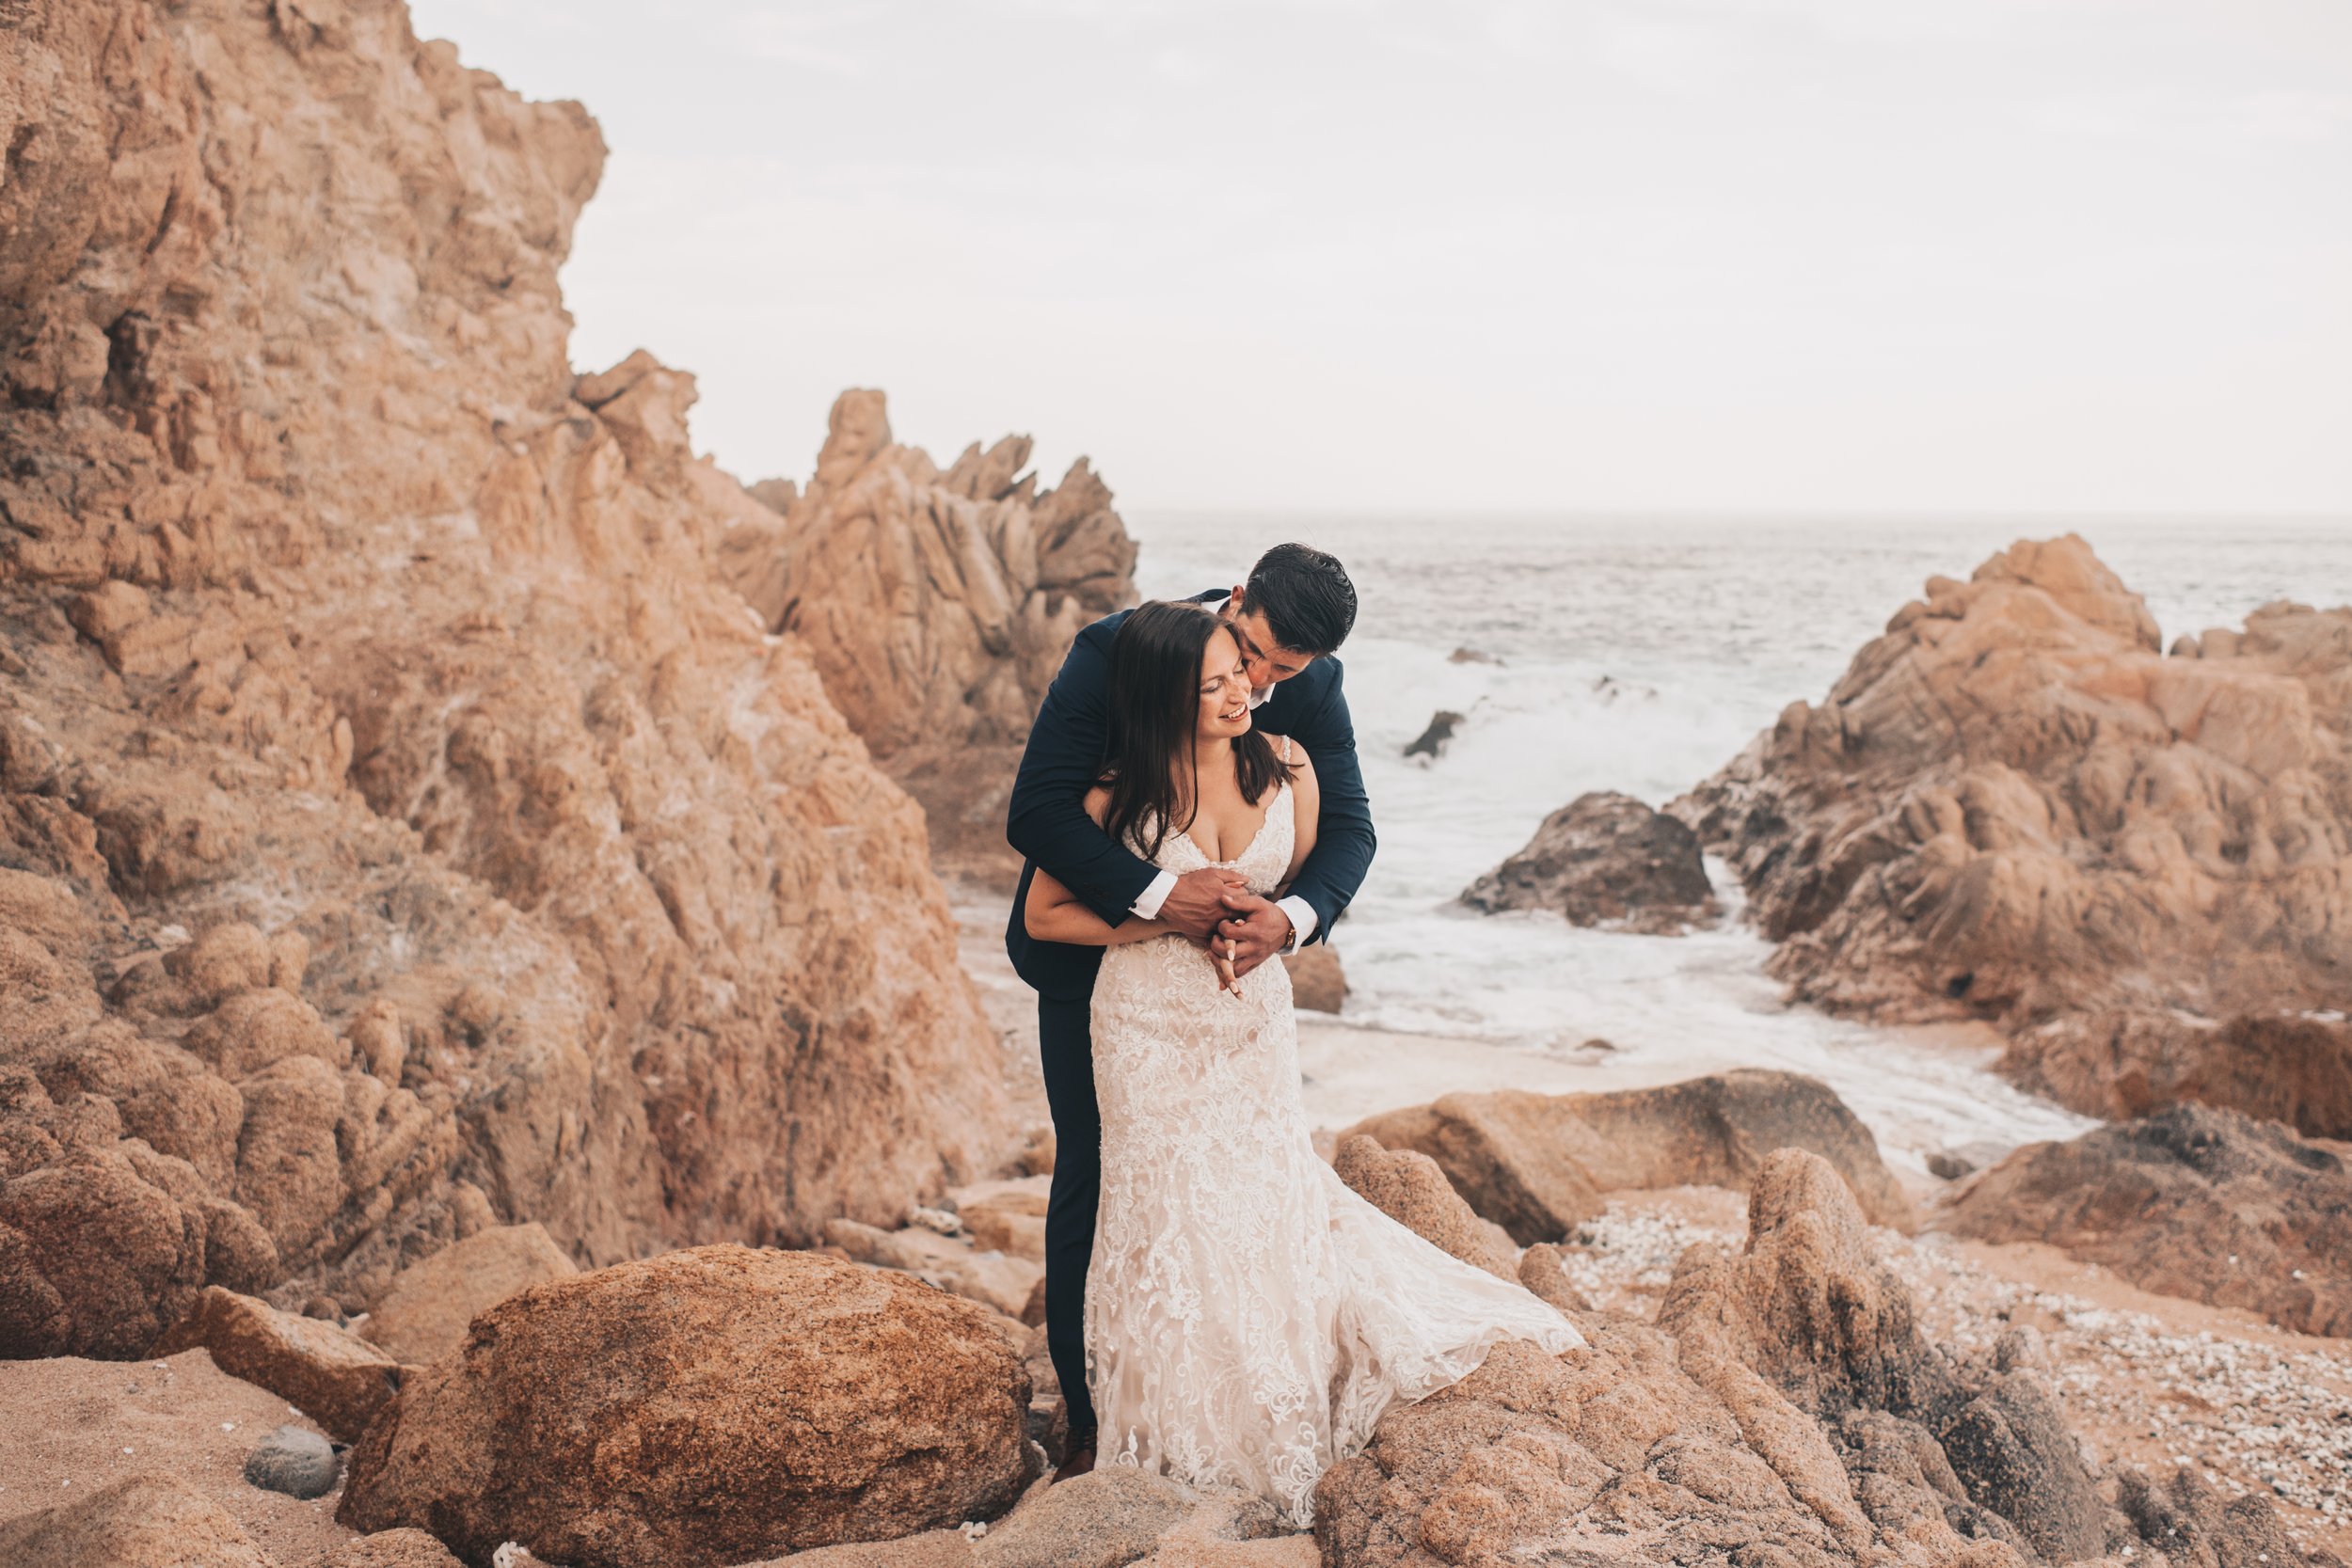 Cabo Wedding, Beach Wedding, Mexico Wedding, Coastal Beach Wedding, Summer Beach Wedding, Cabo San Lucas Destination Wedding